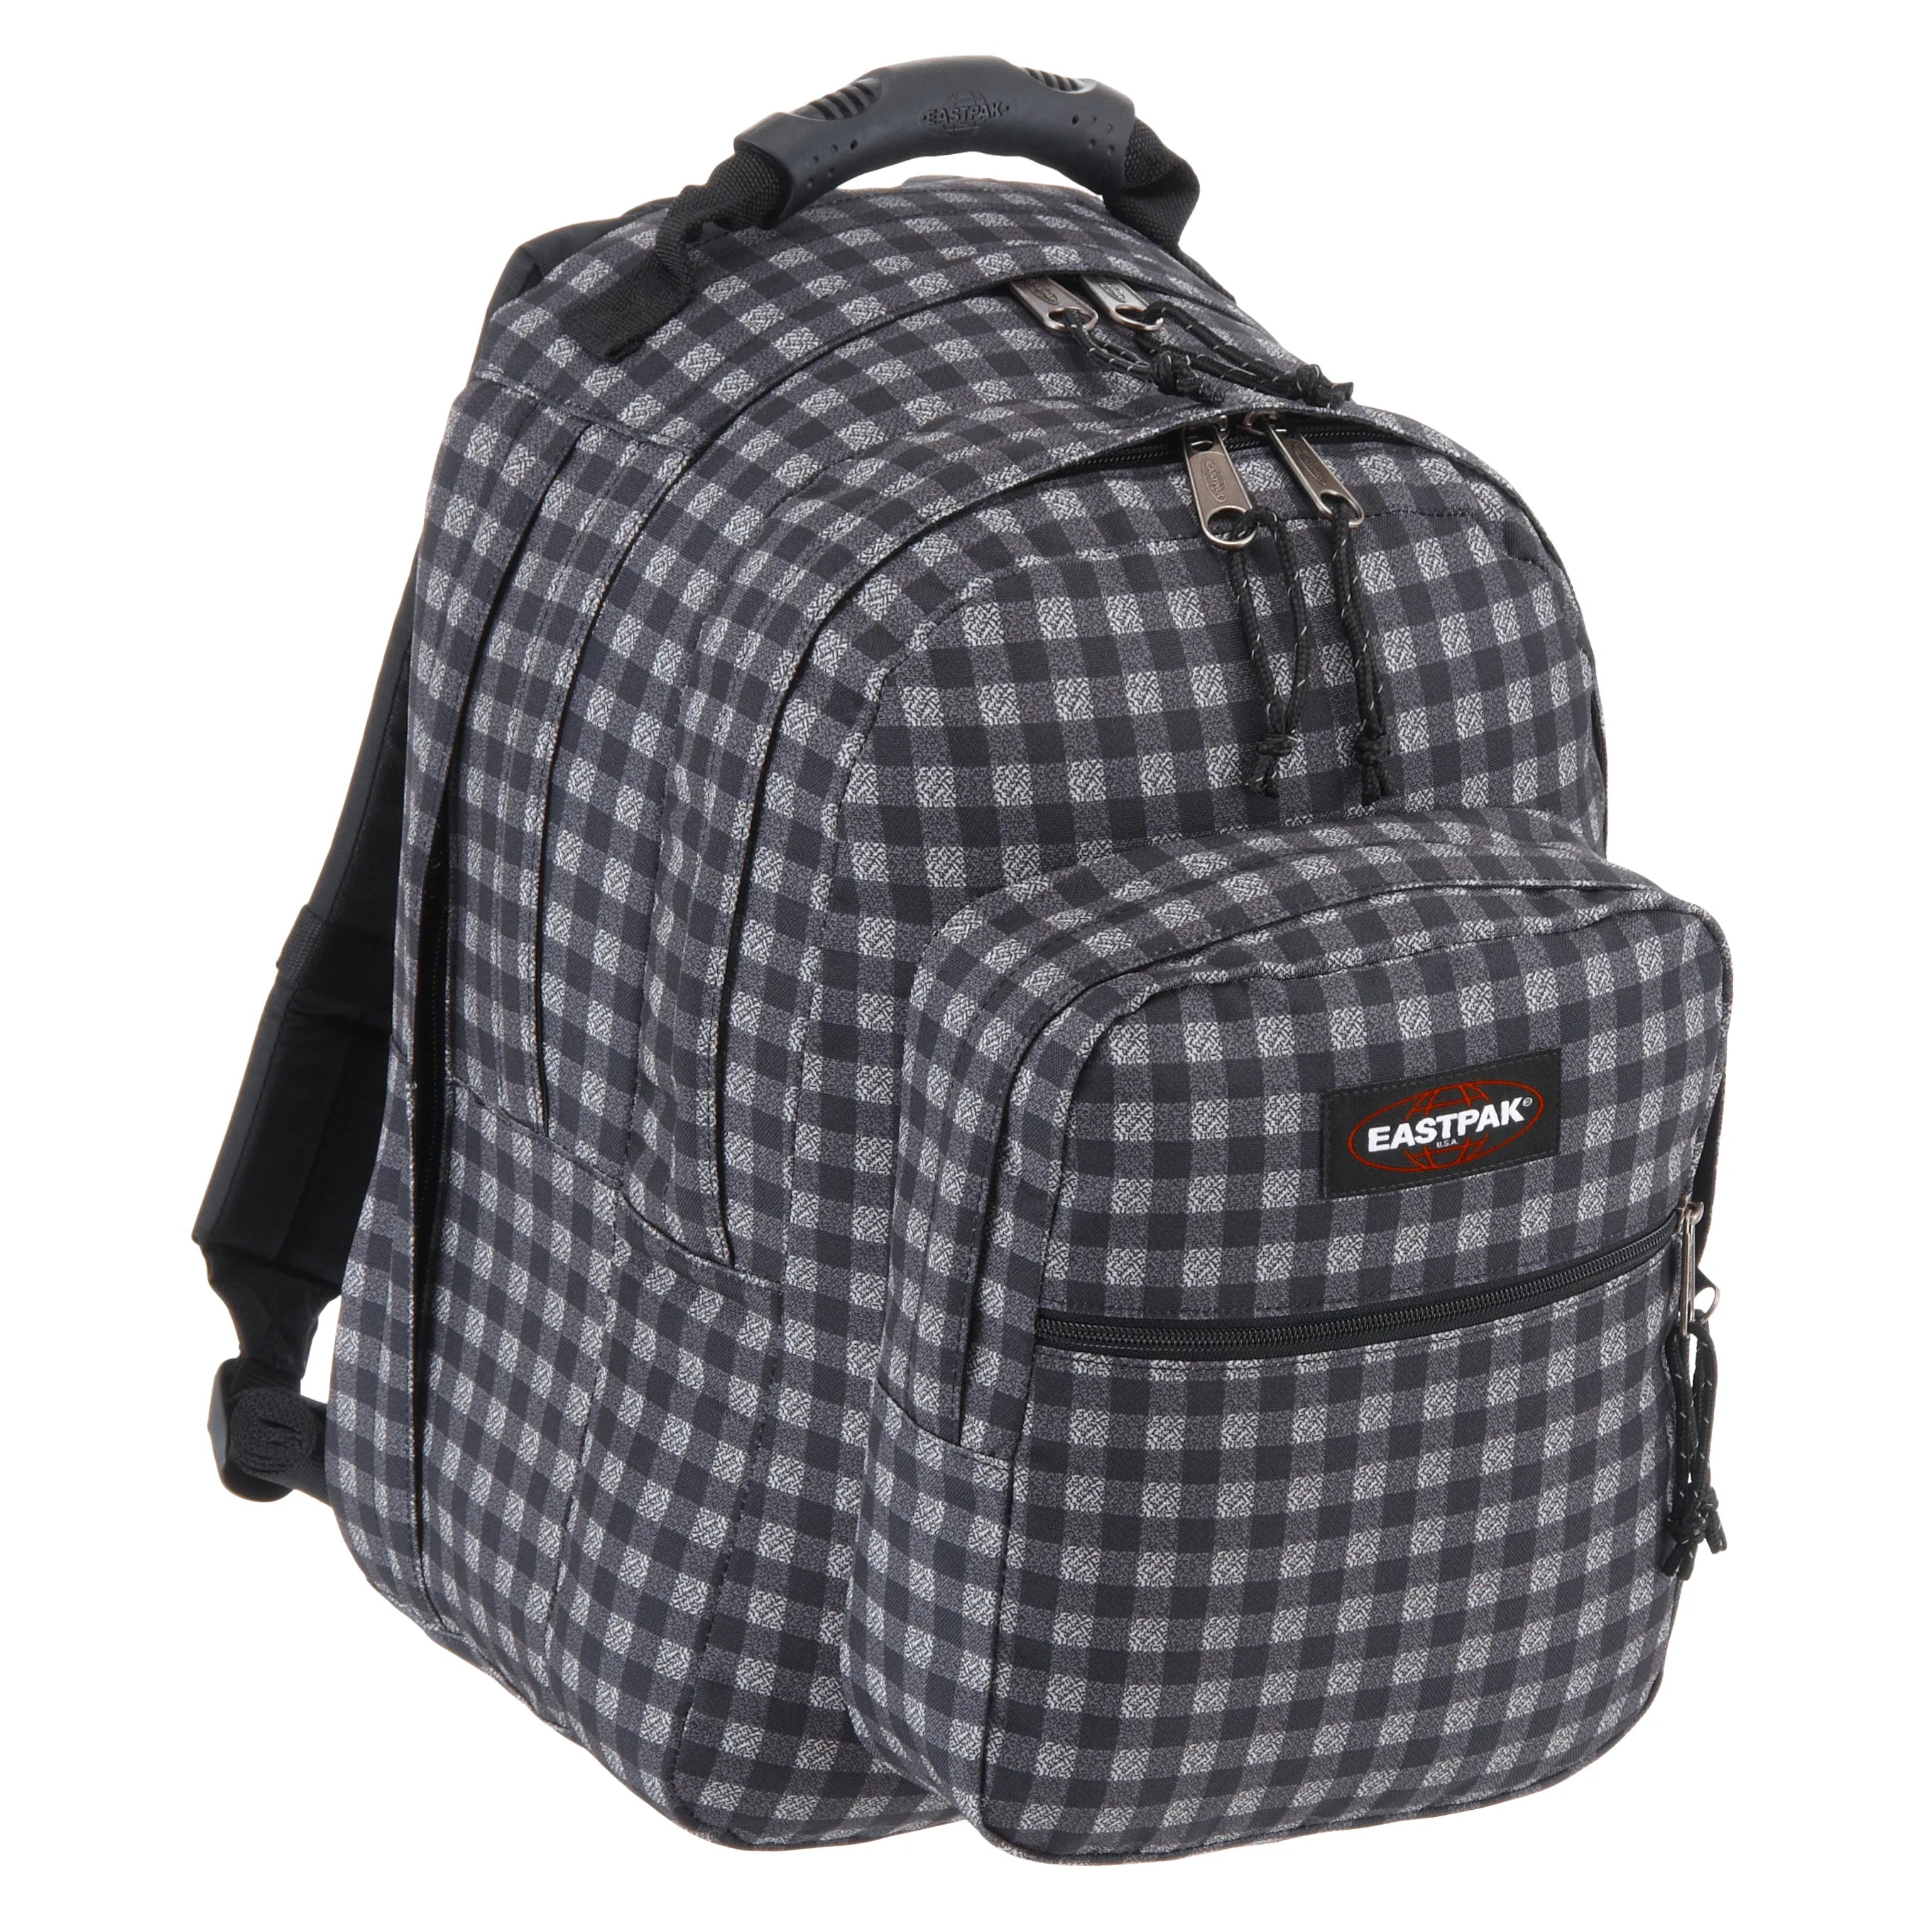 Eastpak Authentic Egghead Laptop Backpack 42 cm - checksange black